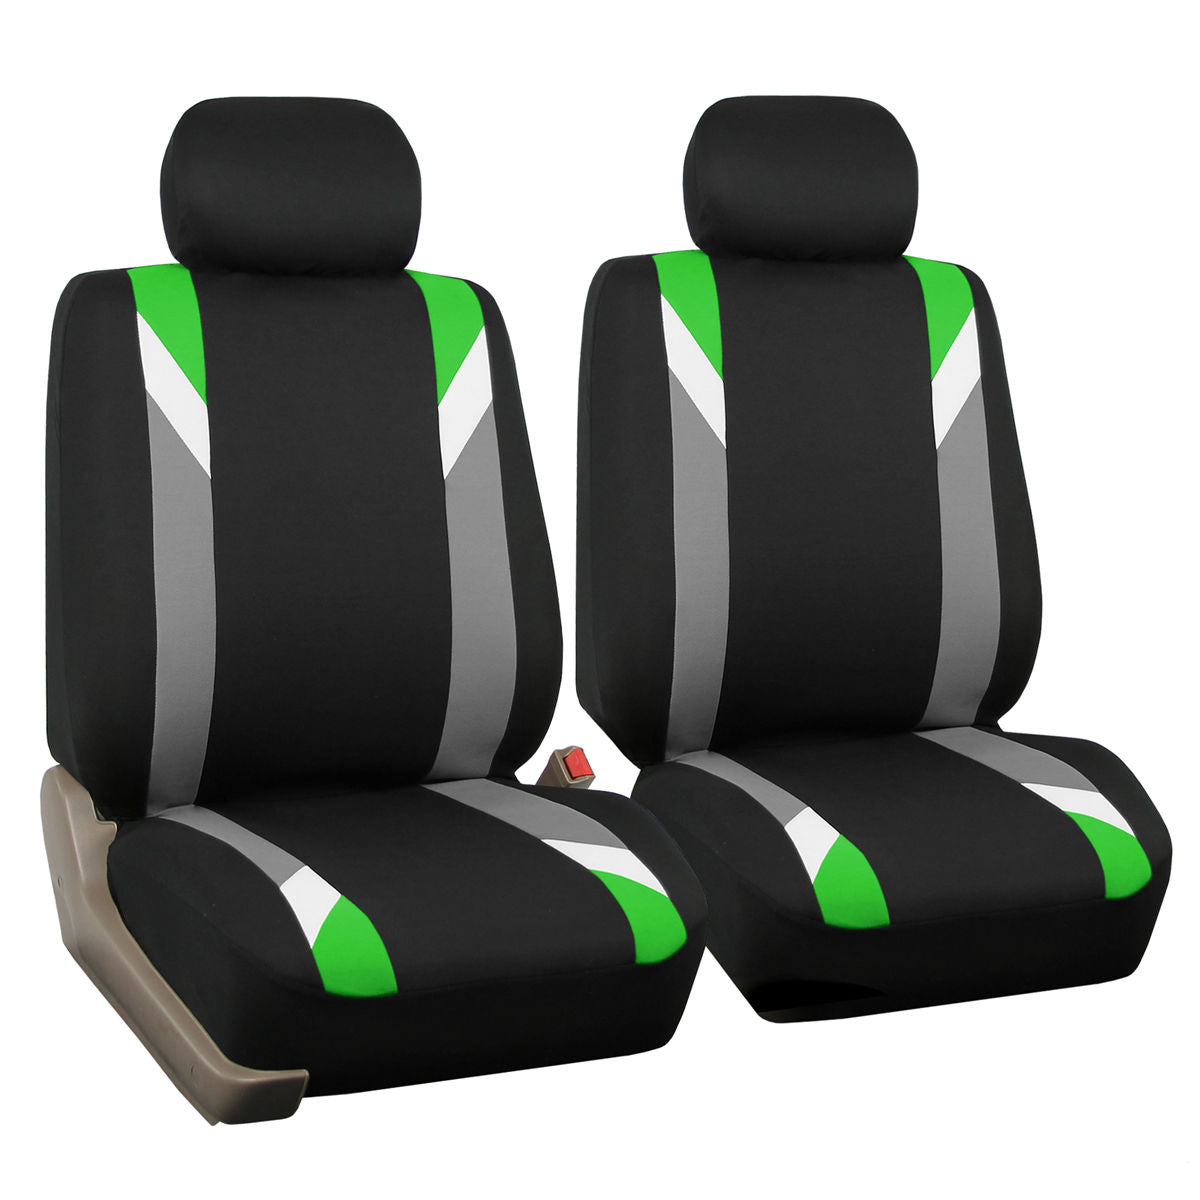 Premium Modernistic Seat Covers - Full Set Green